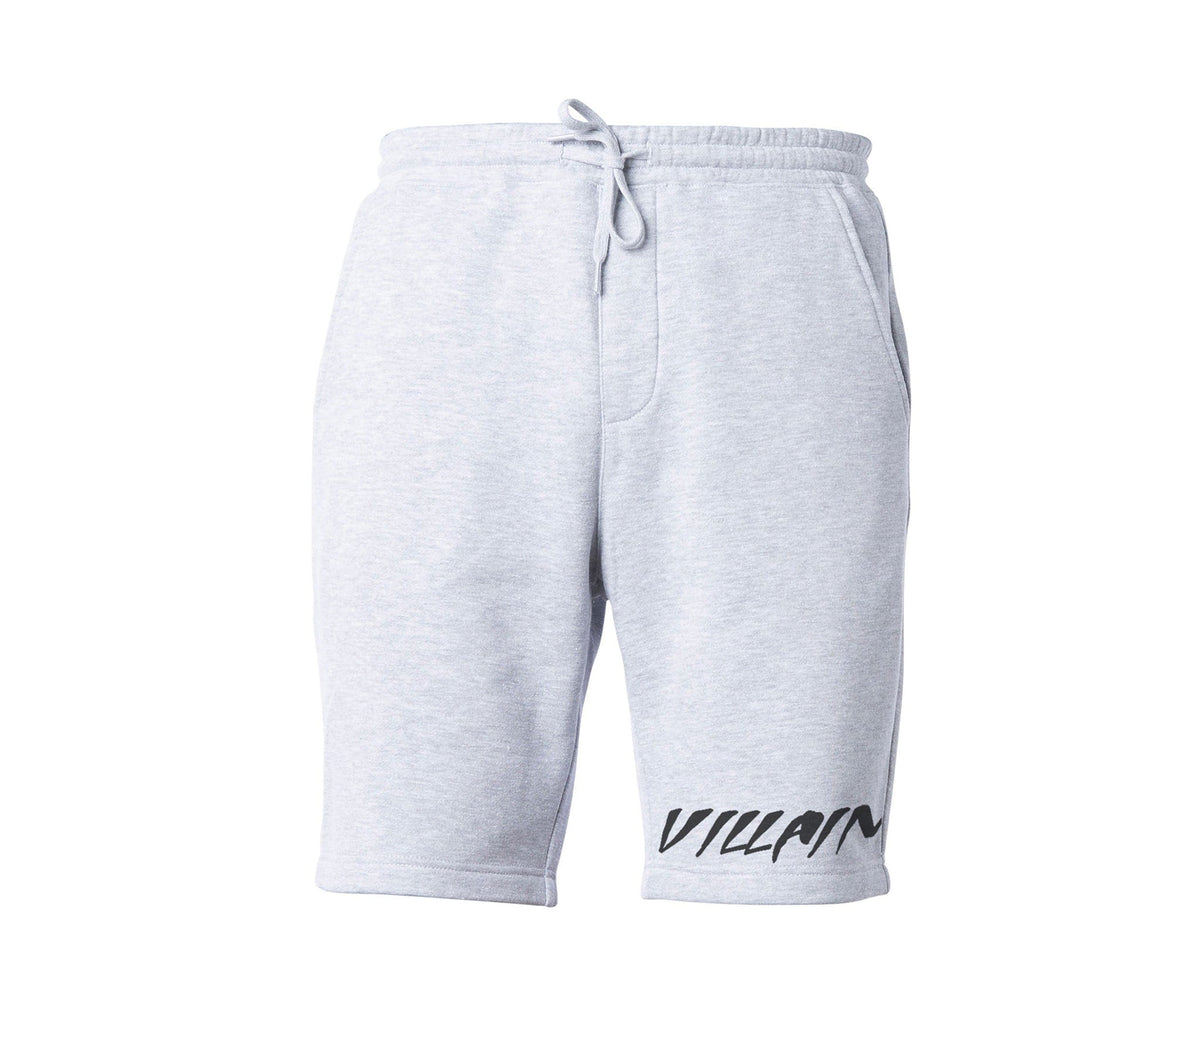 Villain Tapered Fleece Shorts XS / Gray TuffWraps.com